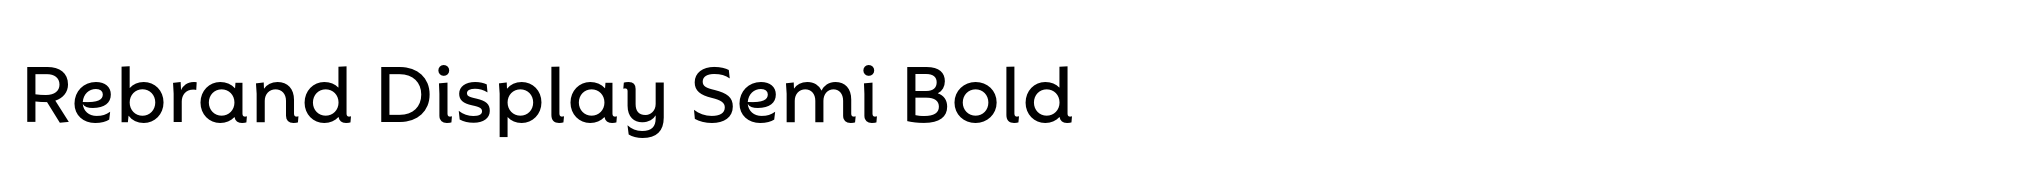 Rebrand Display Semi Bold image